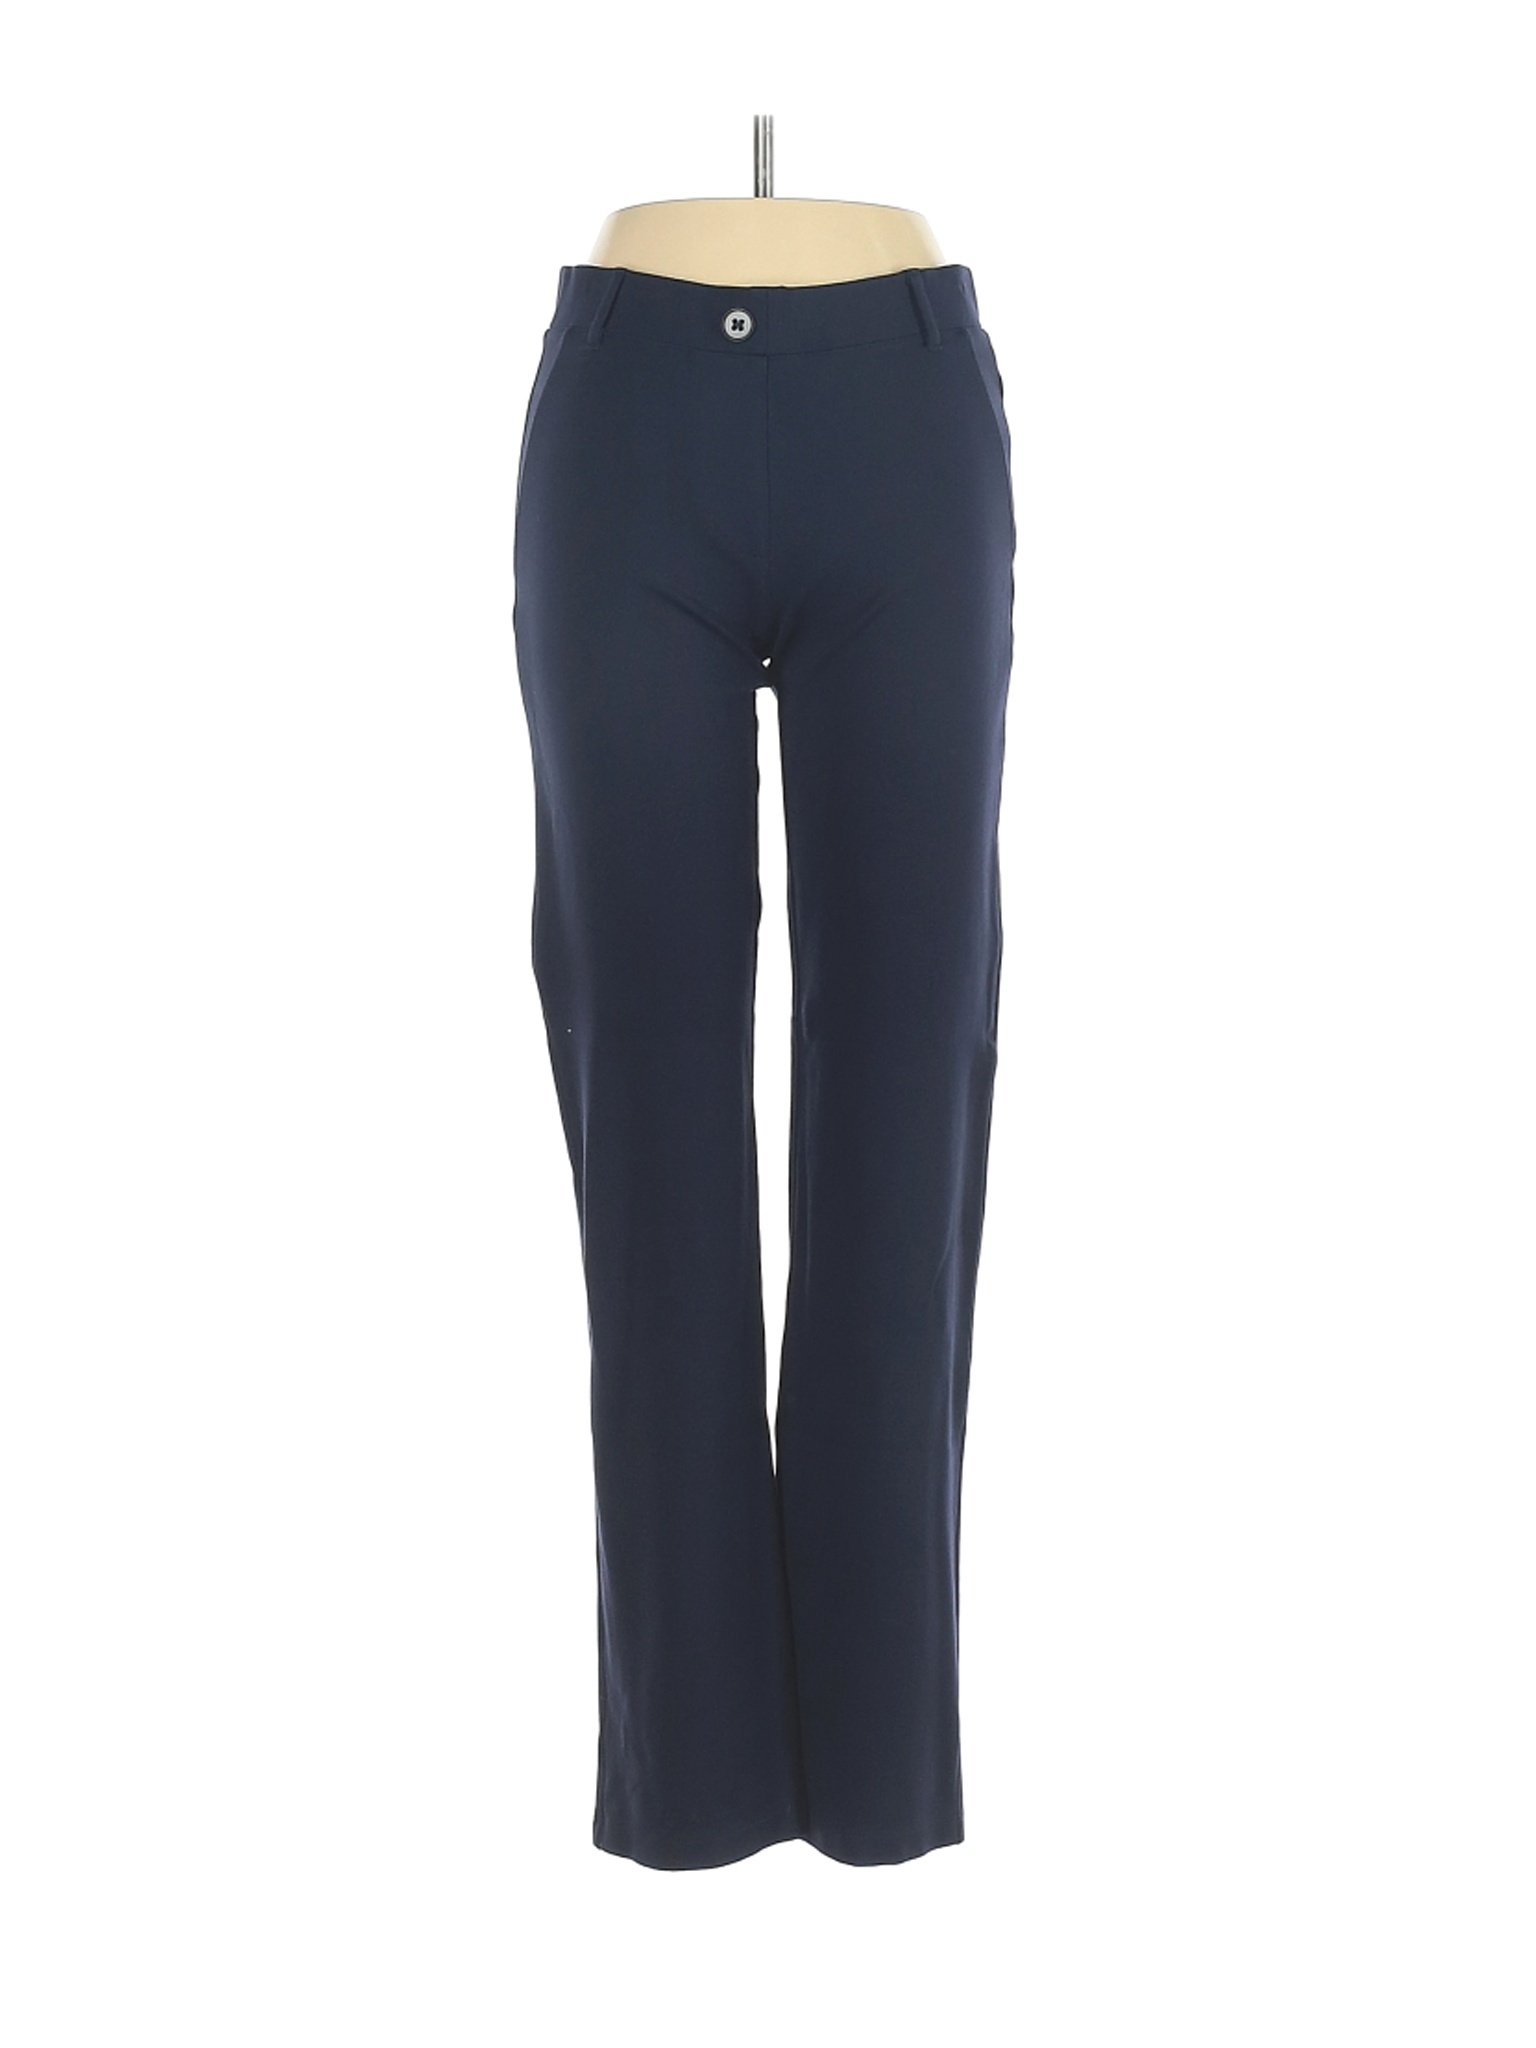 Betabrand Women Blue Casual Pants S Petites | eBay